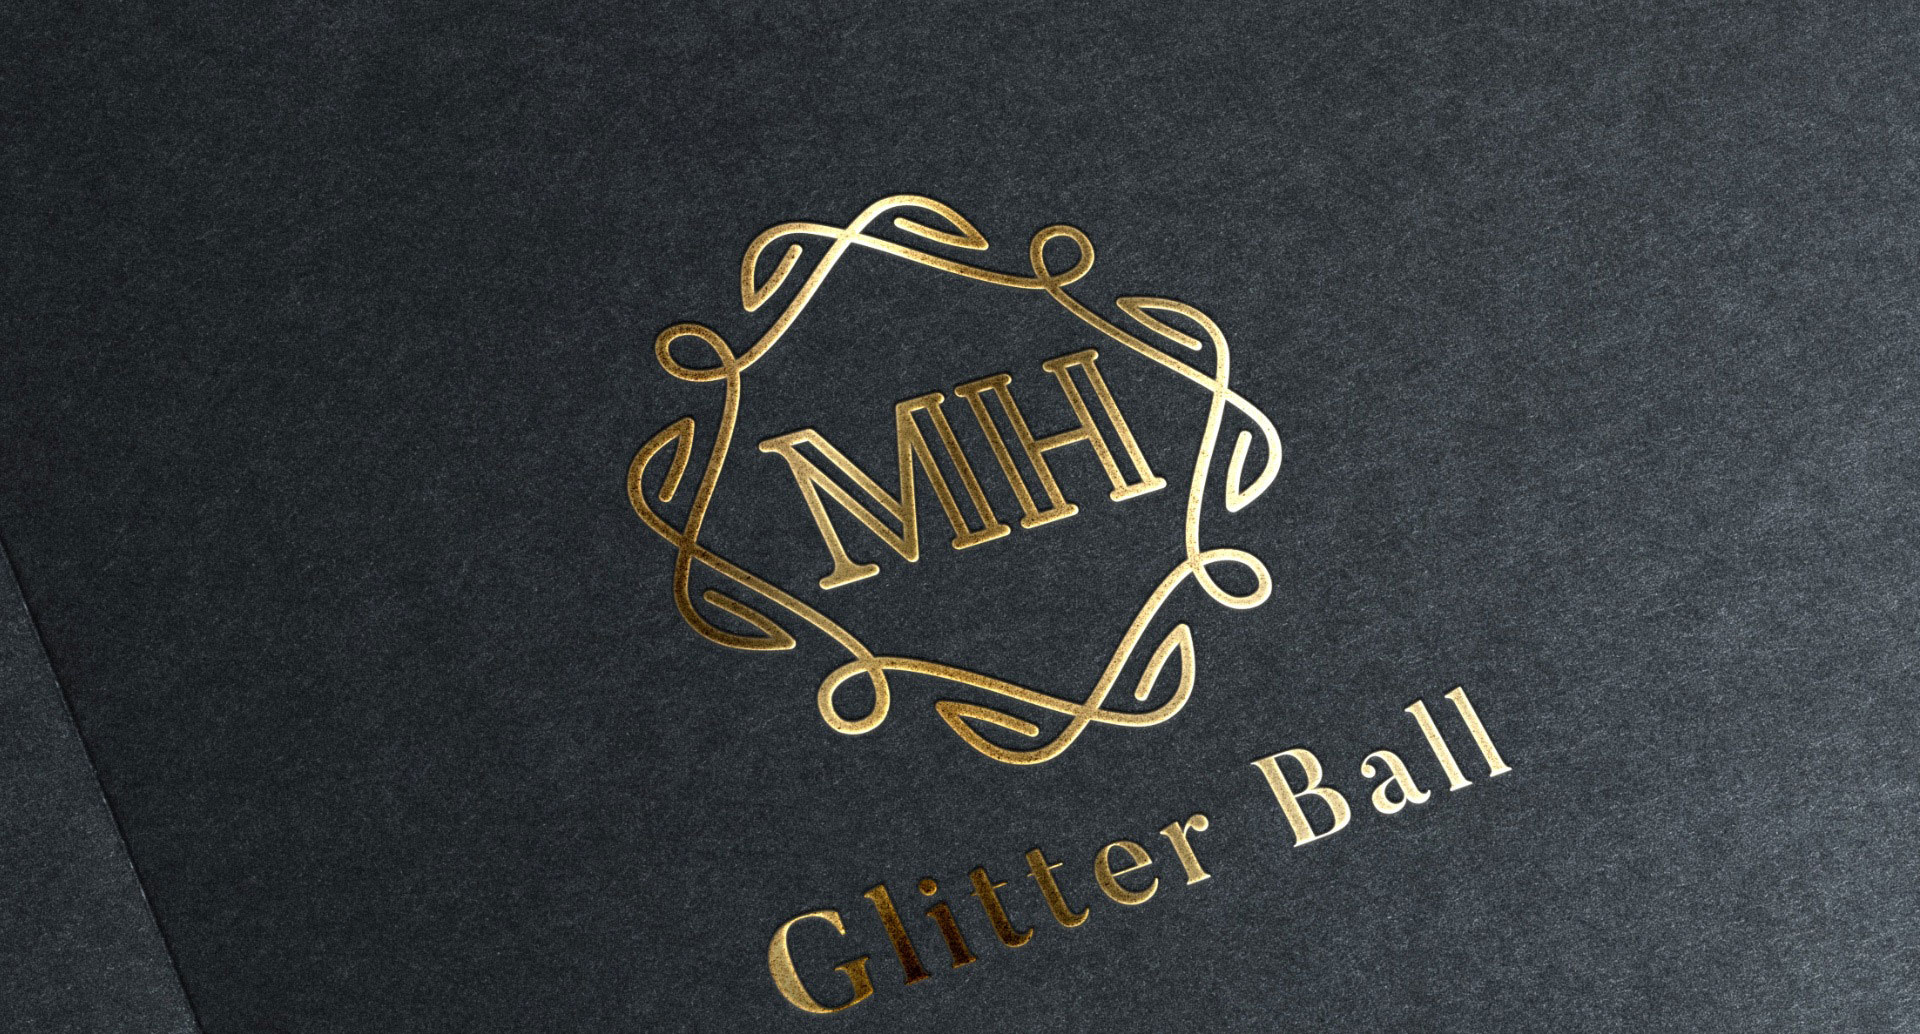 Martin House Glitter Ball project